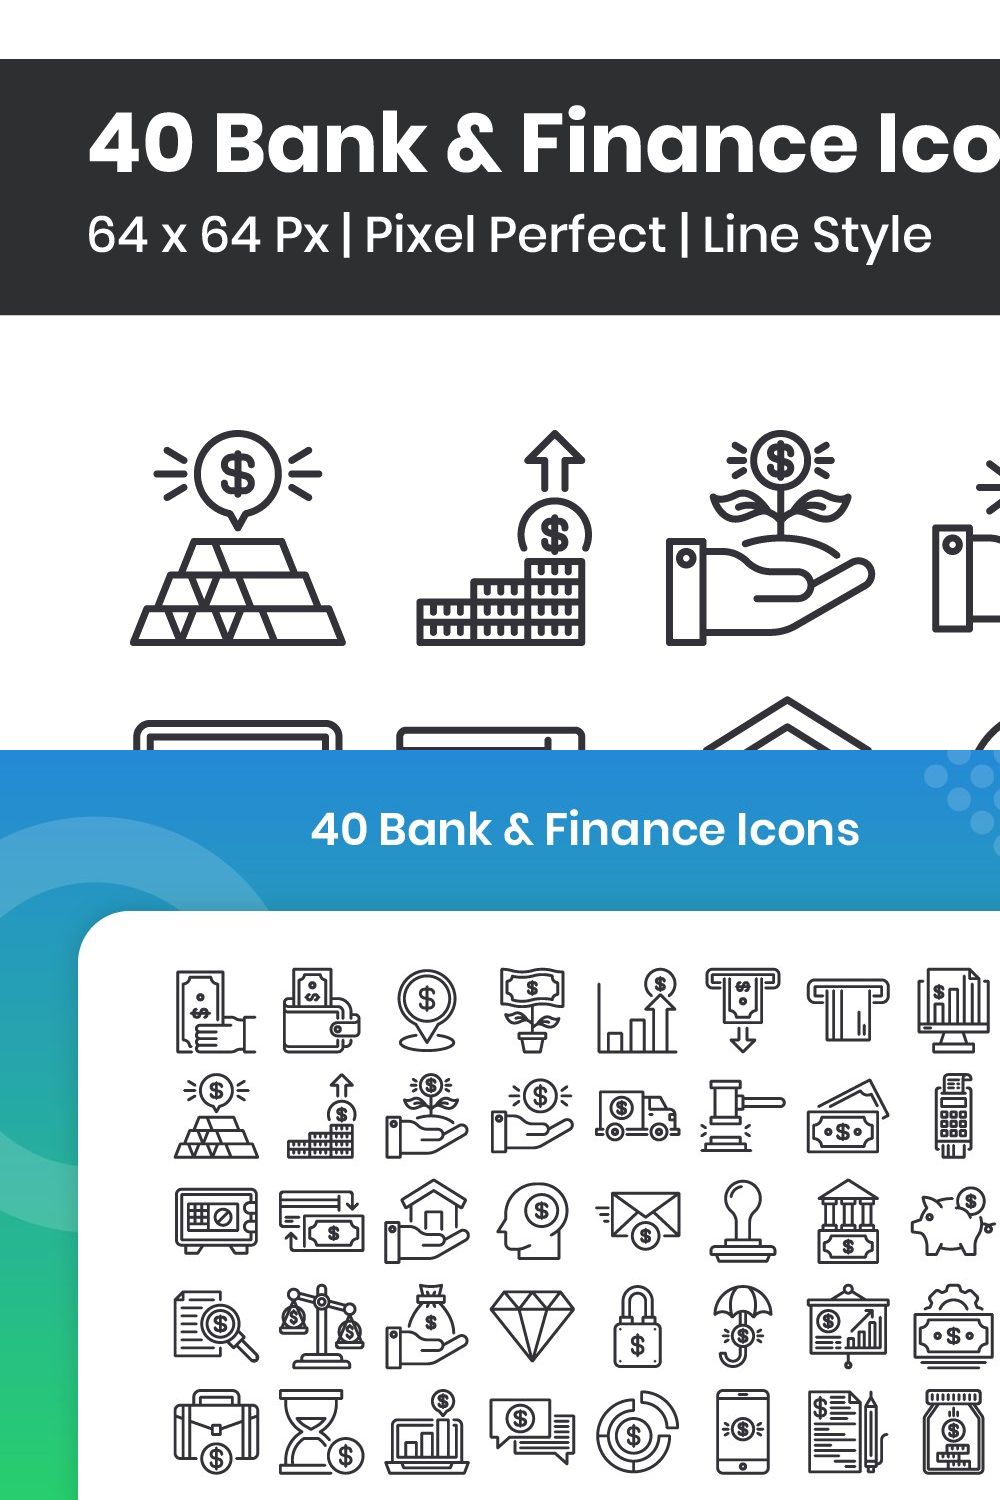 40 Bank & Finance - Line pinterest preview image.